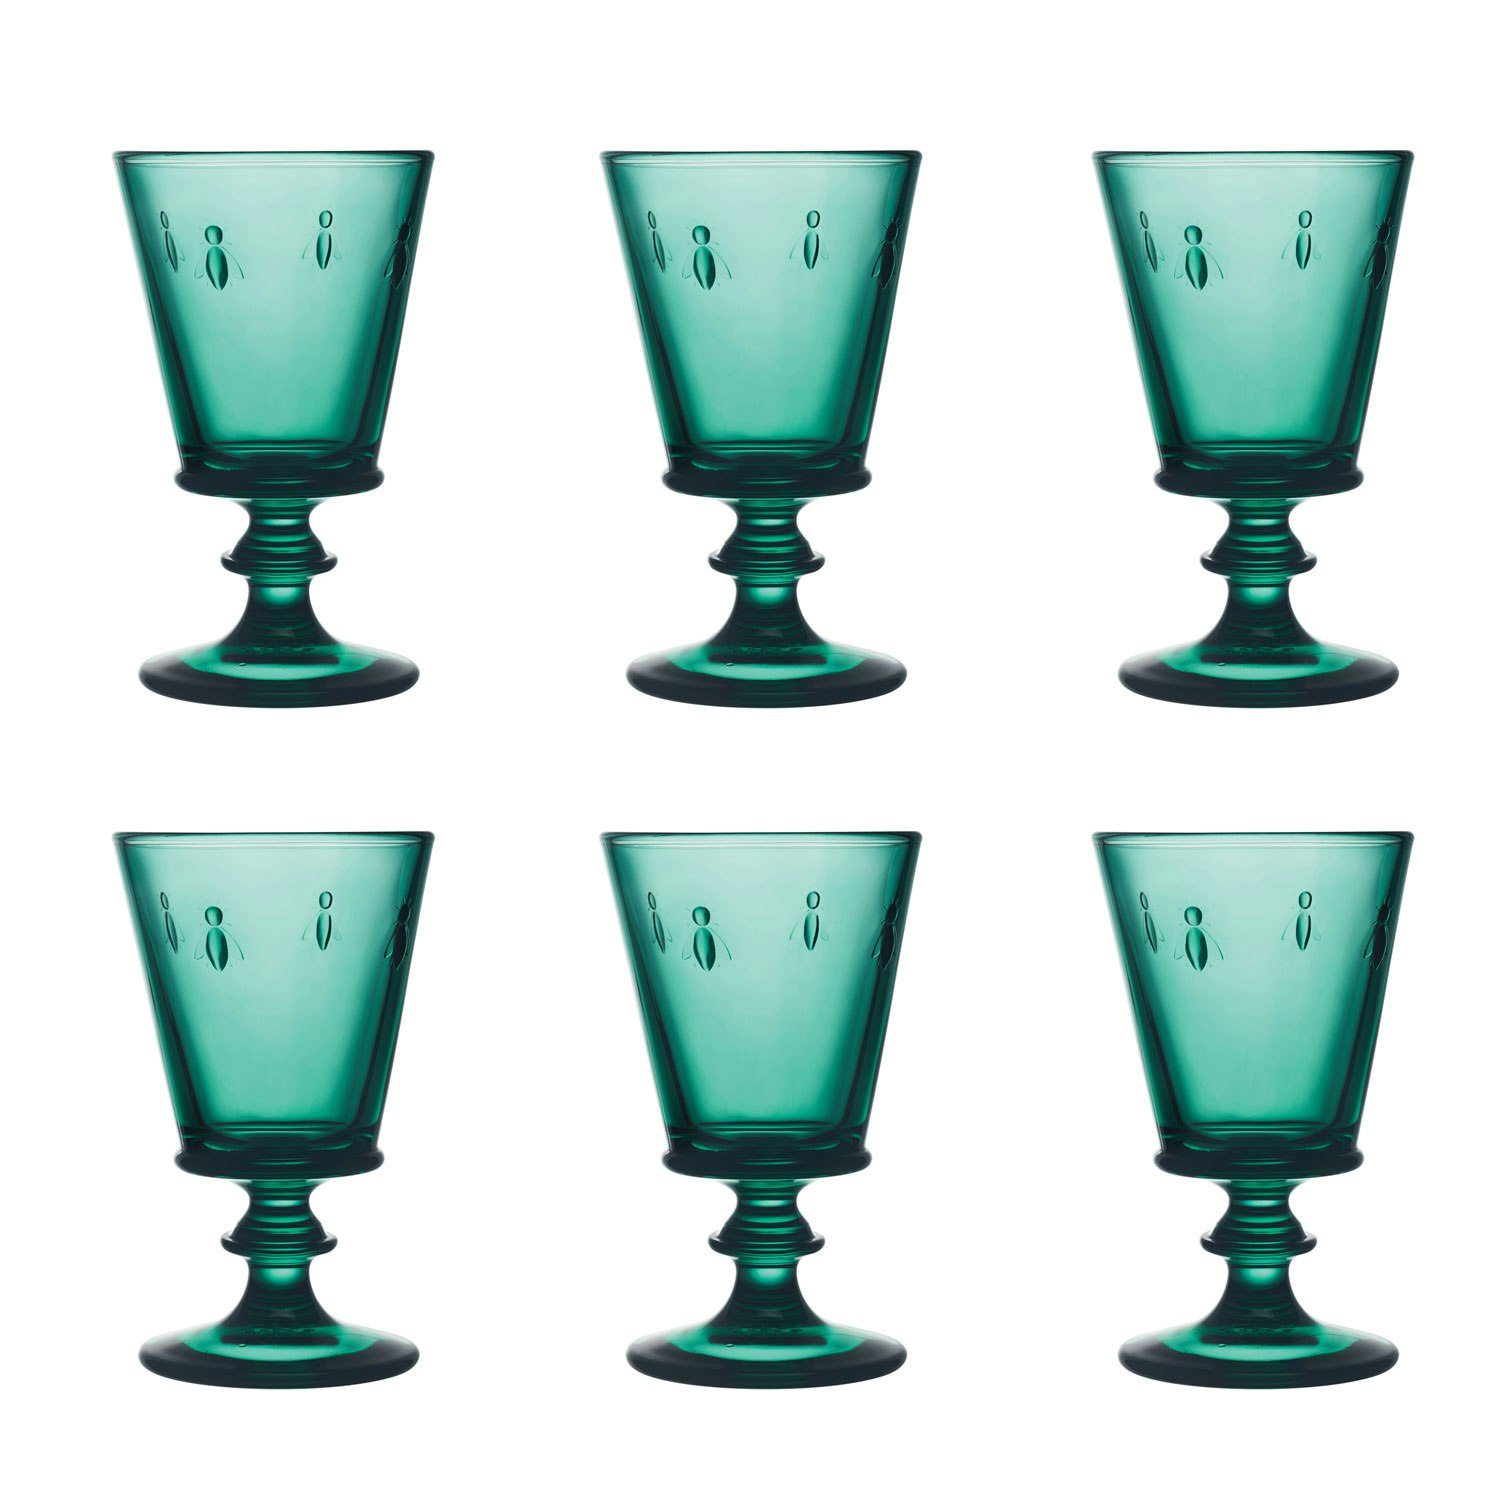 https://royaldesign.com/image/2/la-rochere-abeille-wine-glass-6-pack-4